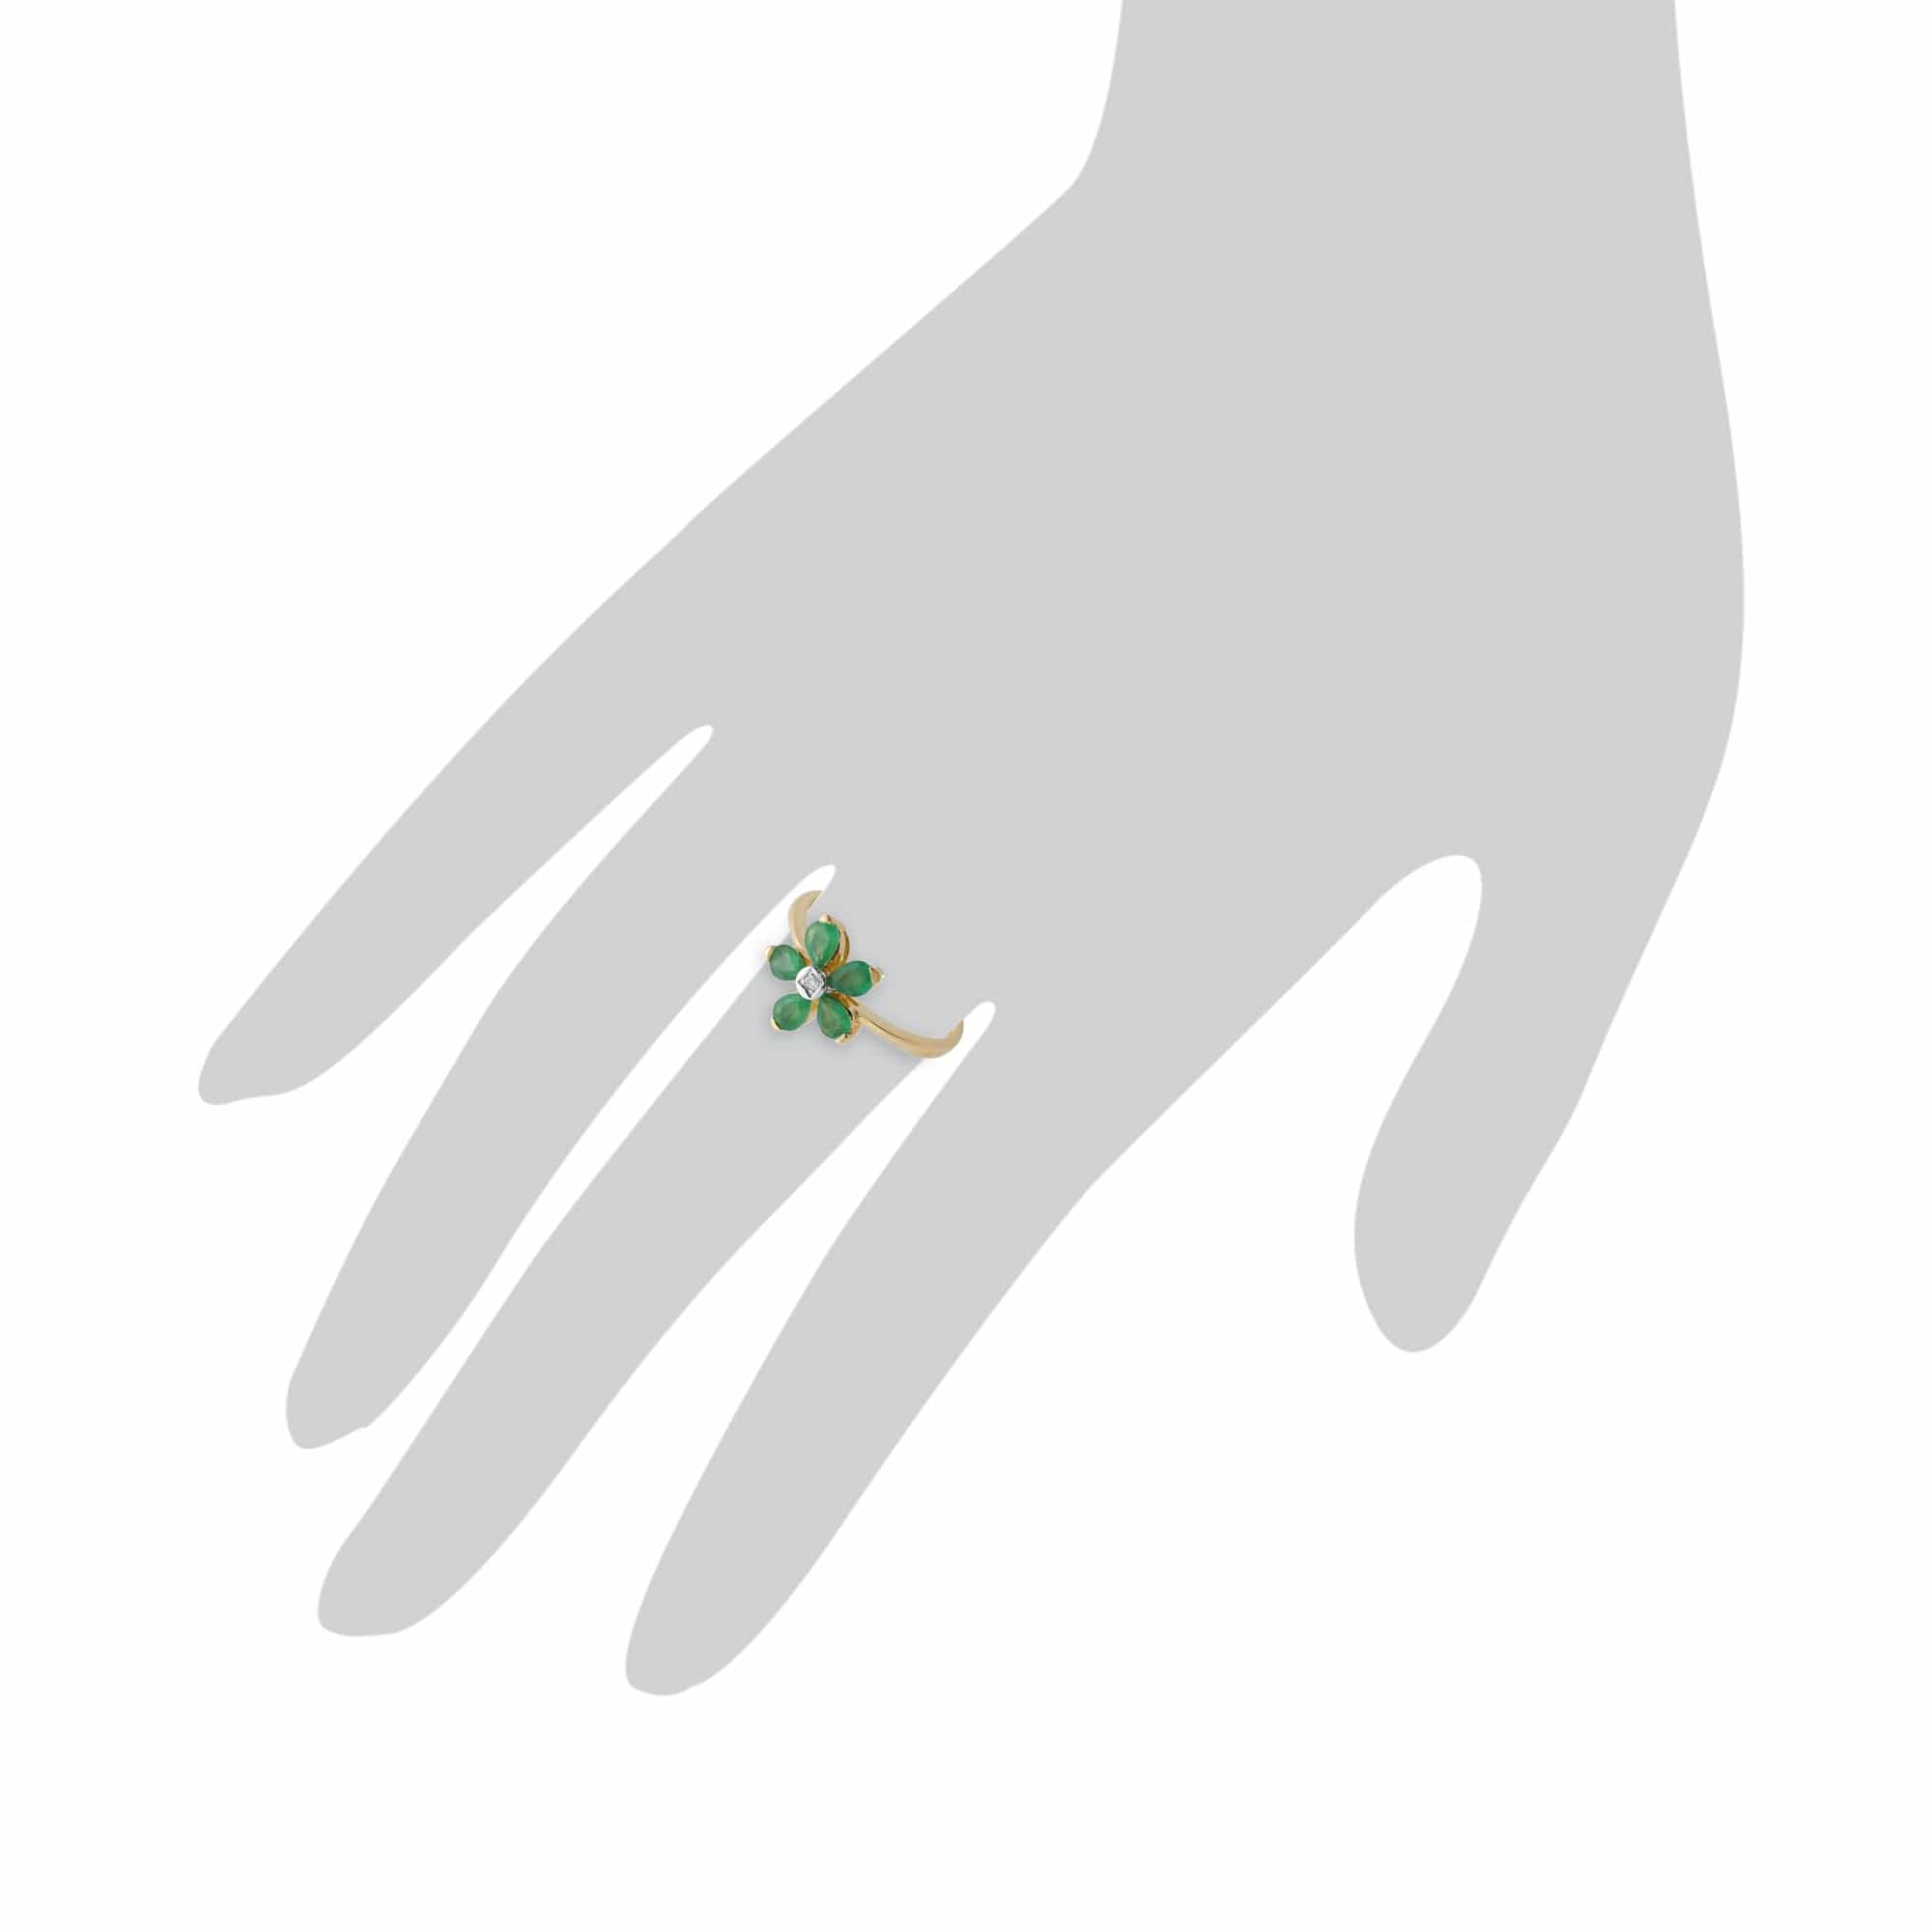 Gemondo 9ct Yellow Gold 0.76ct Emerald & Diamond Floral Ring Image 3